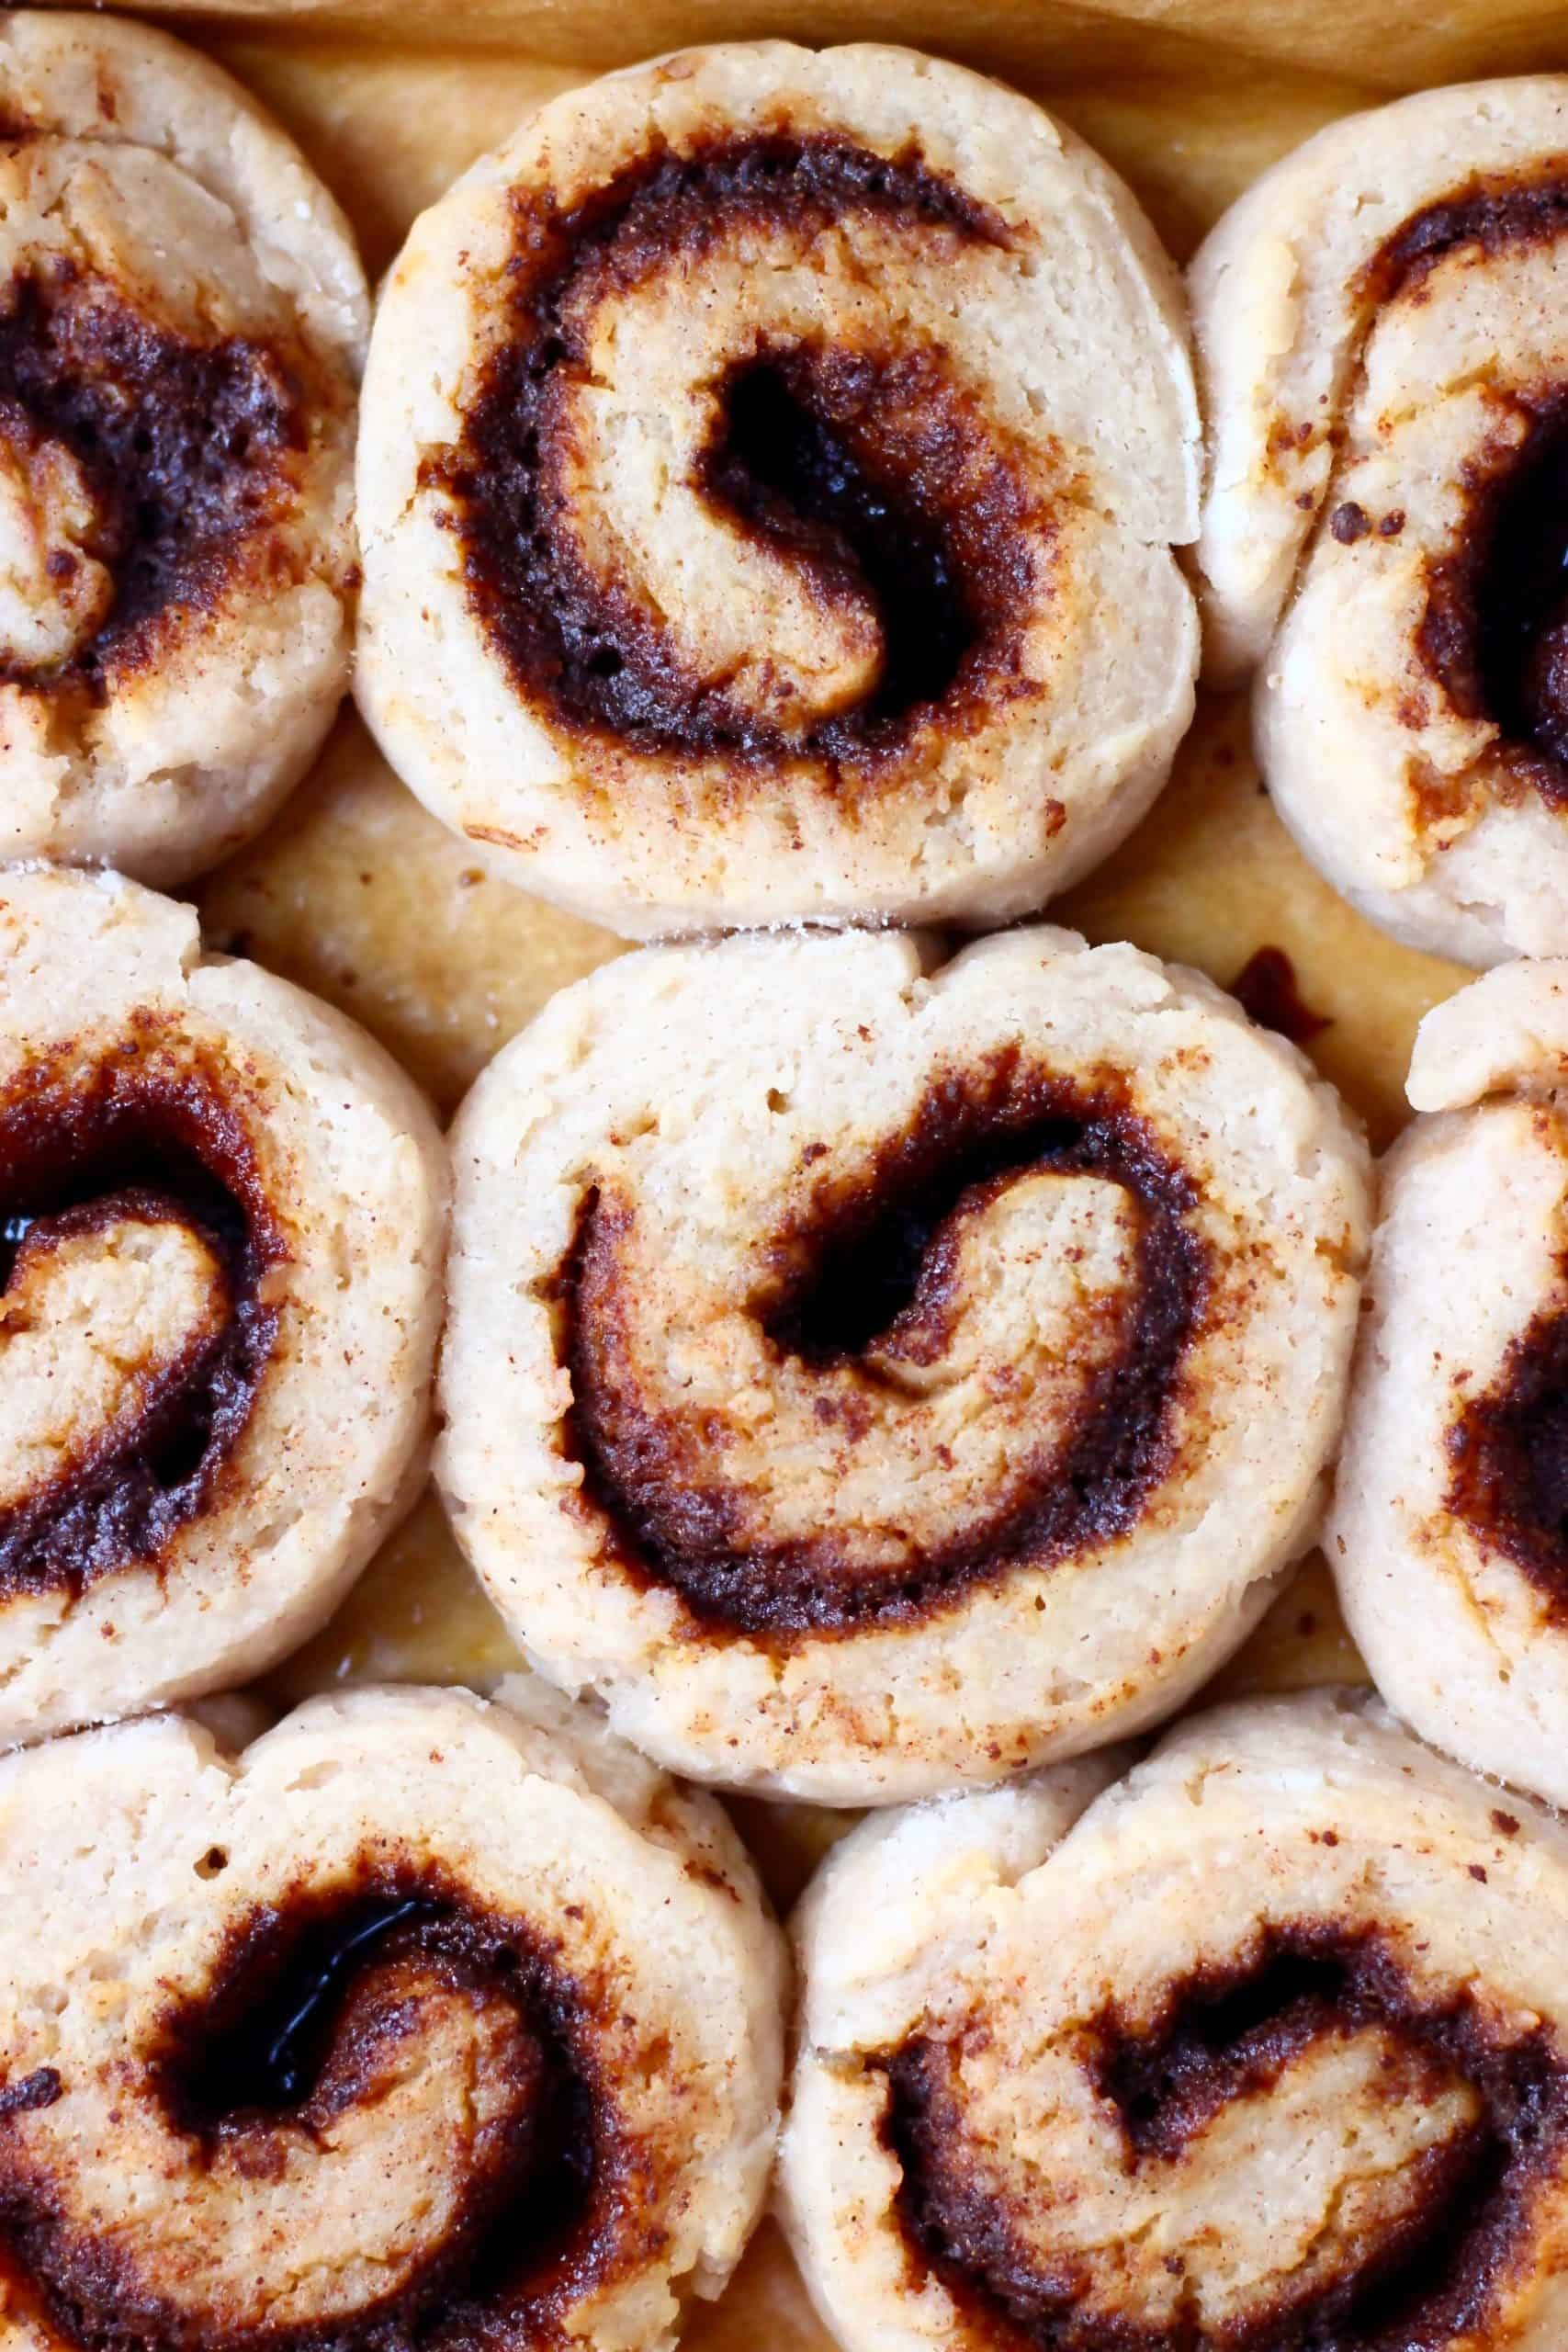 Nine cinnamon rolls in a baking tray